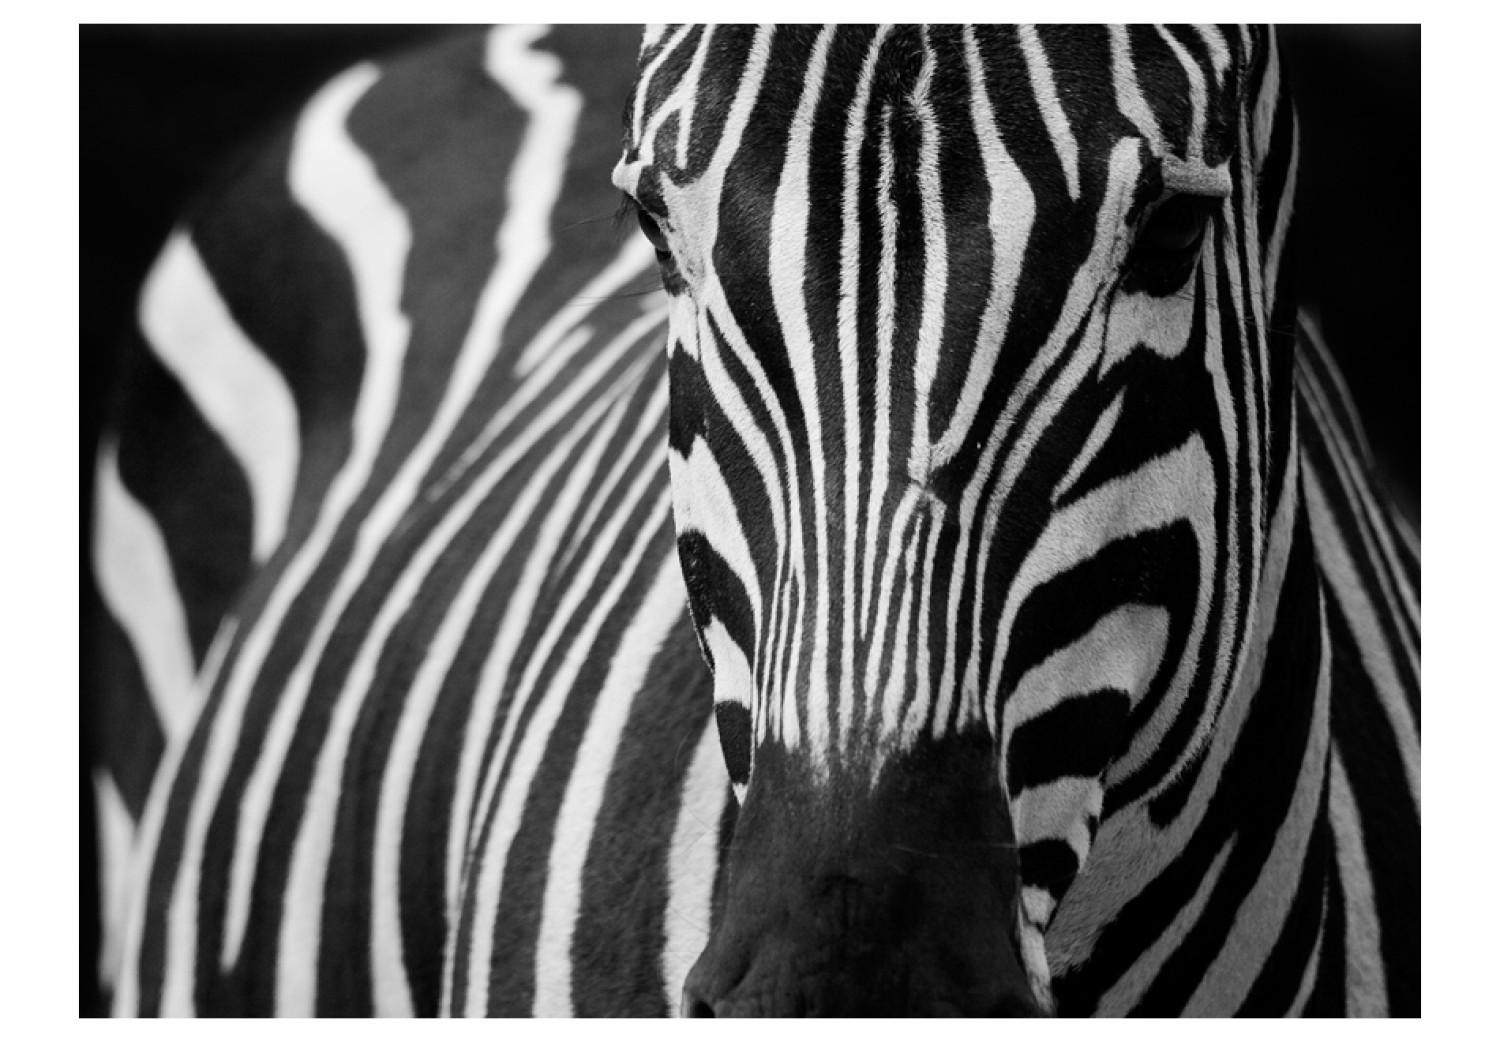 Fotomural a medida Naturaleza africana - cebra en blanco y negro sobre fondo negro